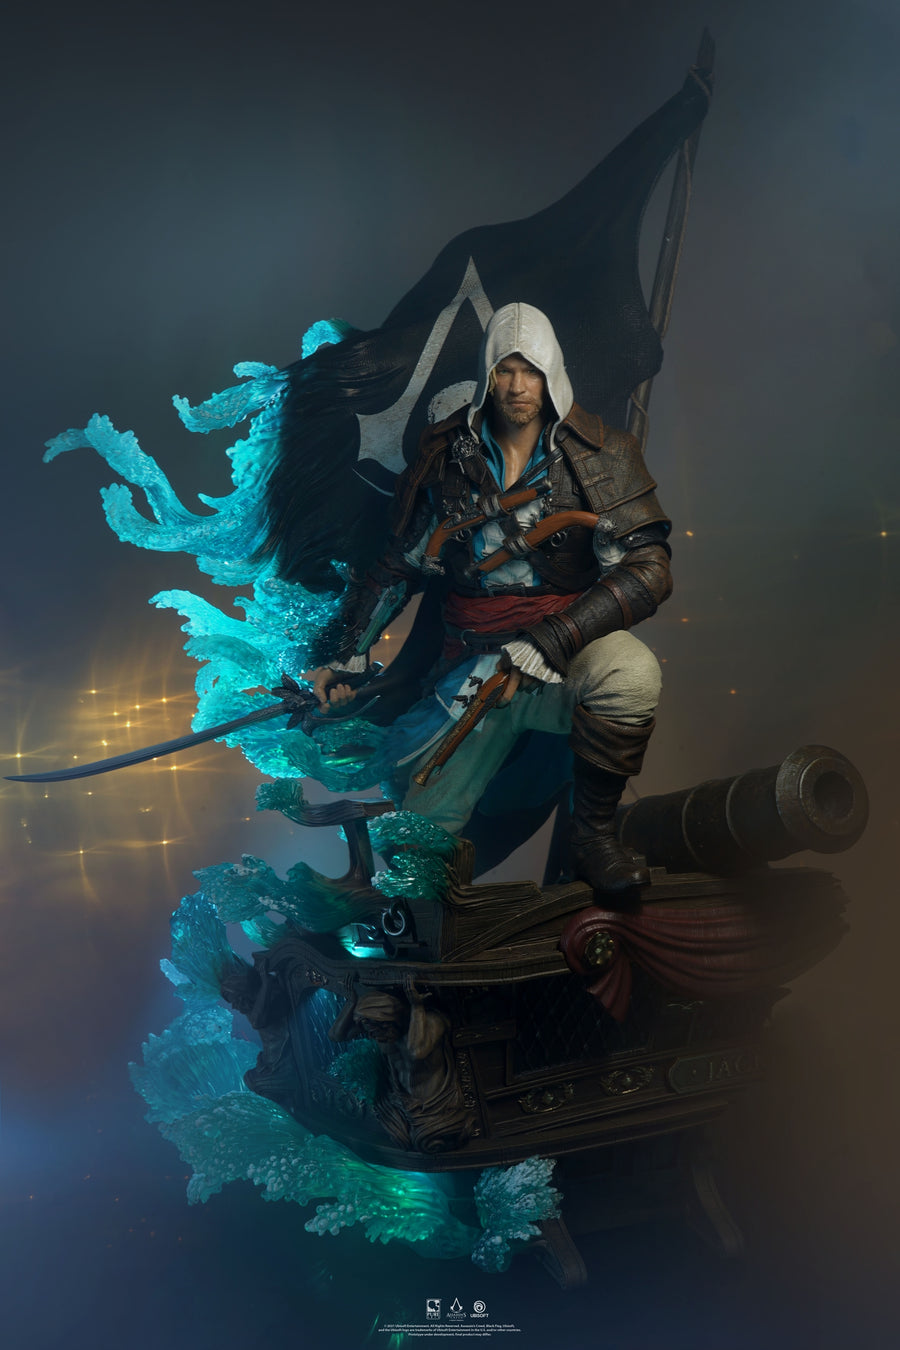 Assassin's Creed® IV Black Flag™ - Standard Edition